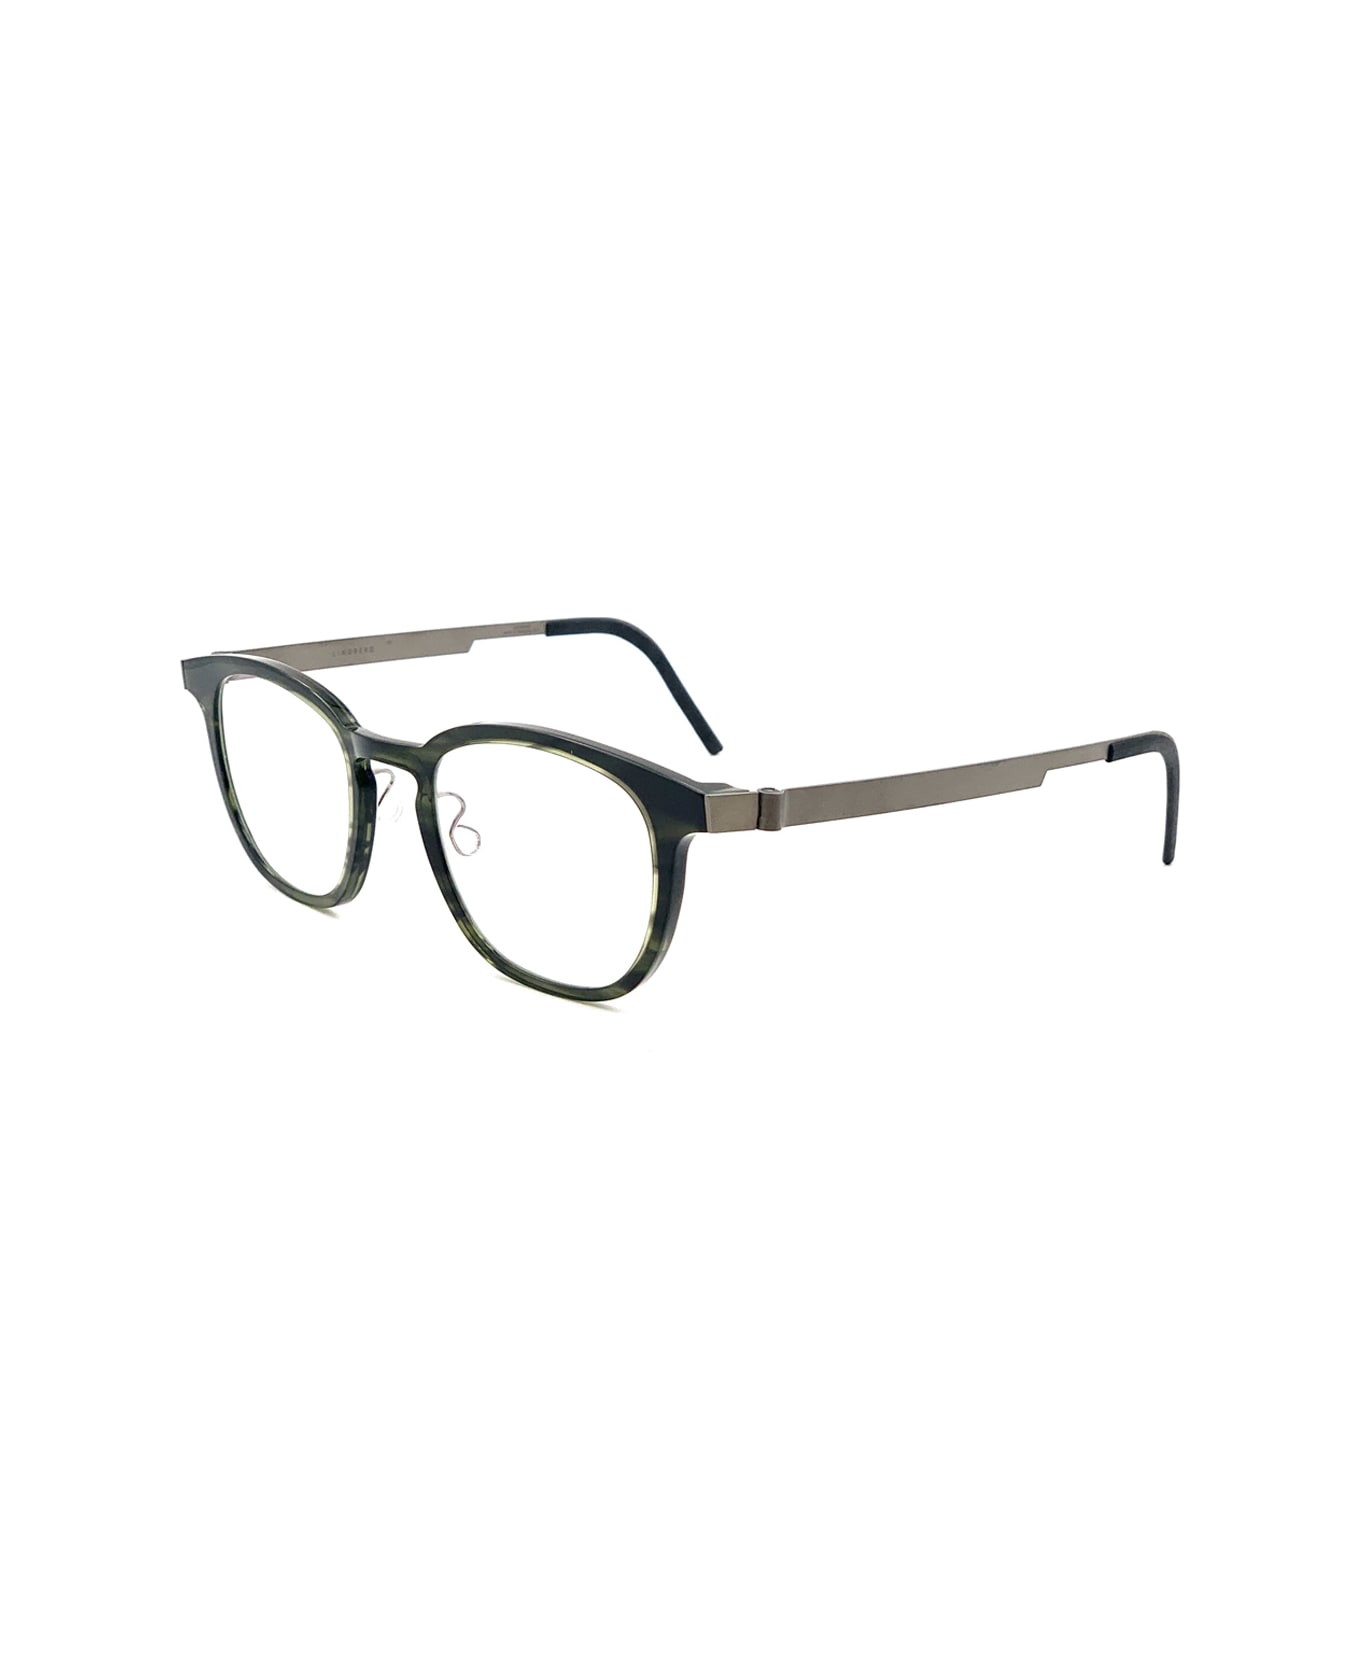 LINDBERG Acetanium 1051 Glasses - Verde アイウェア